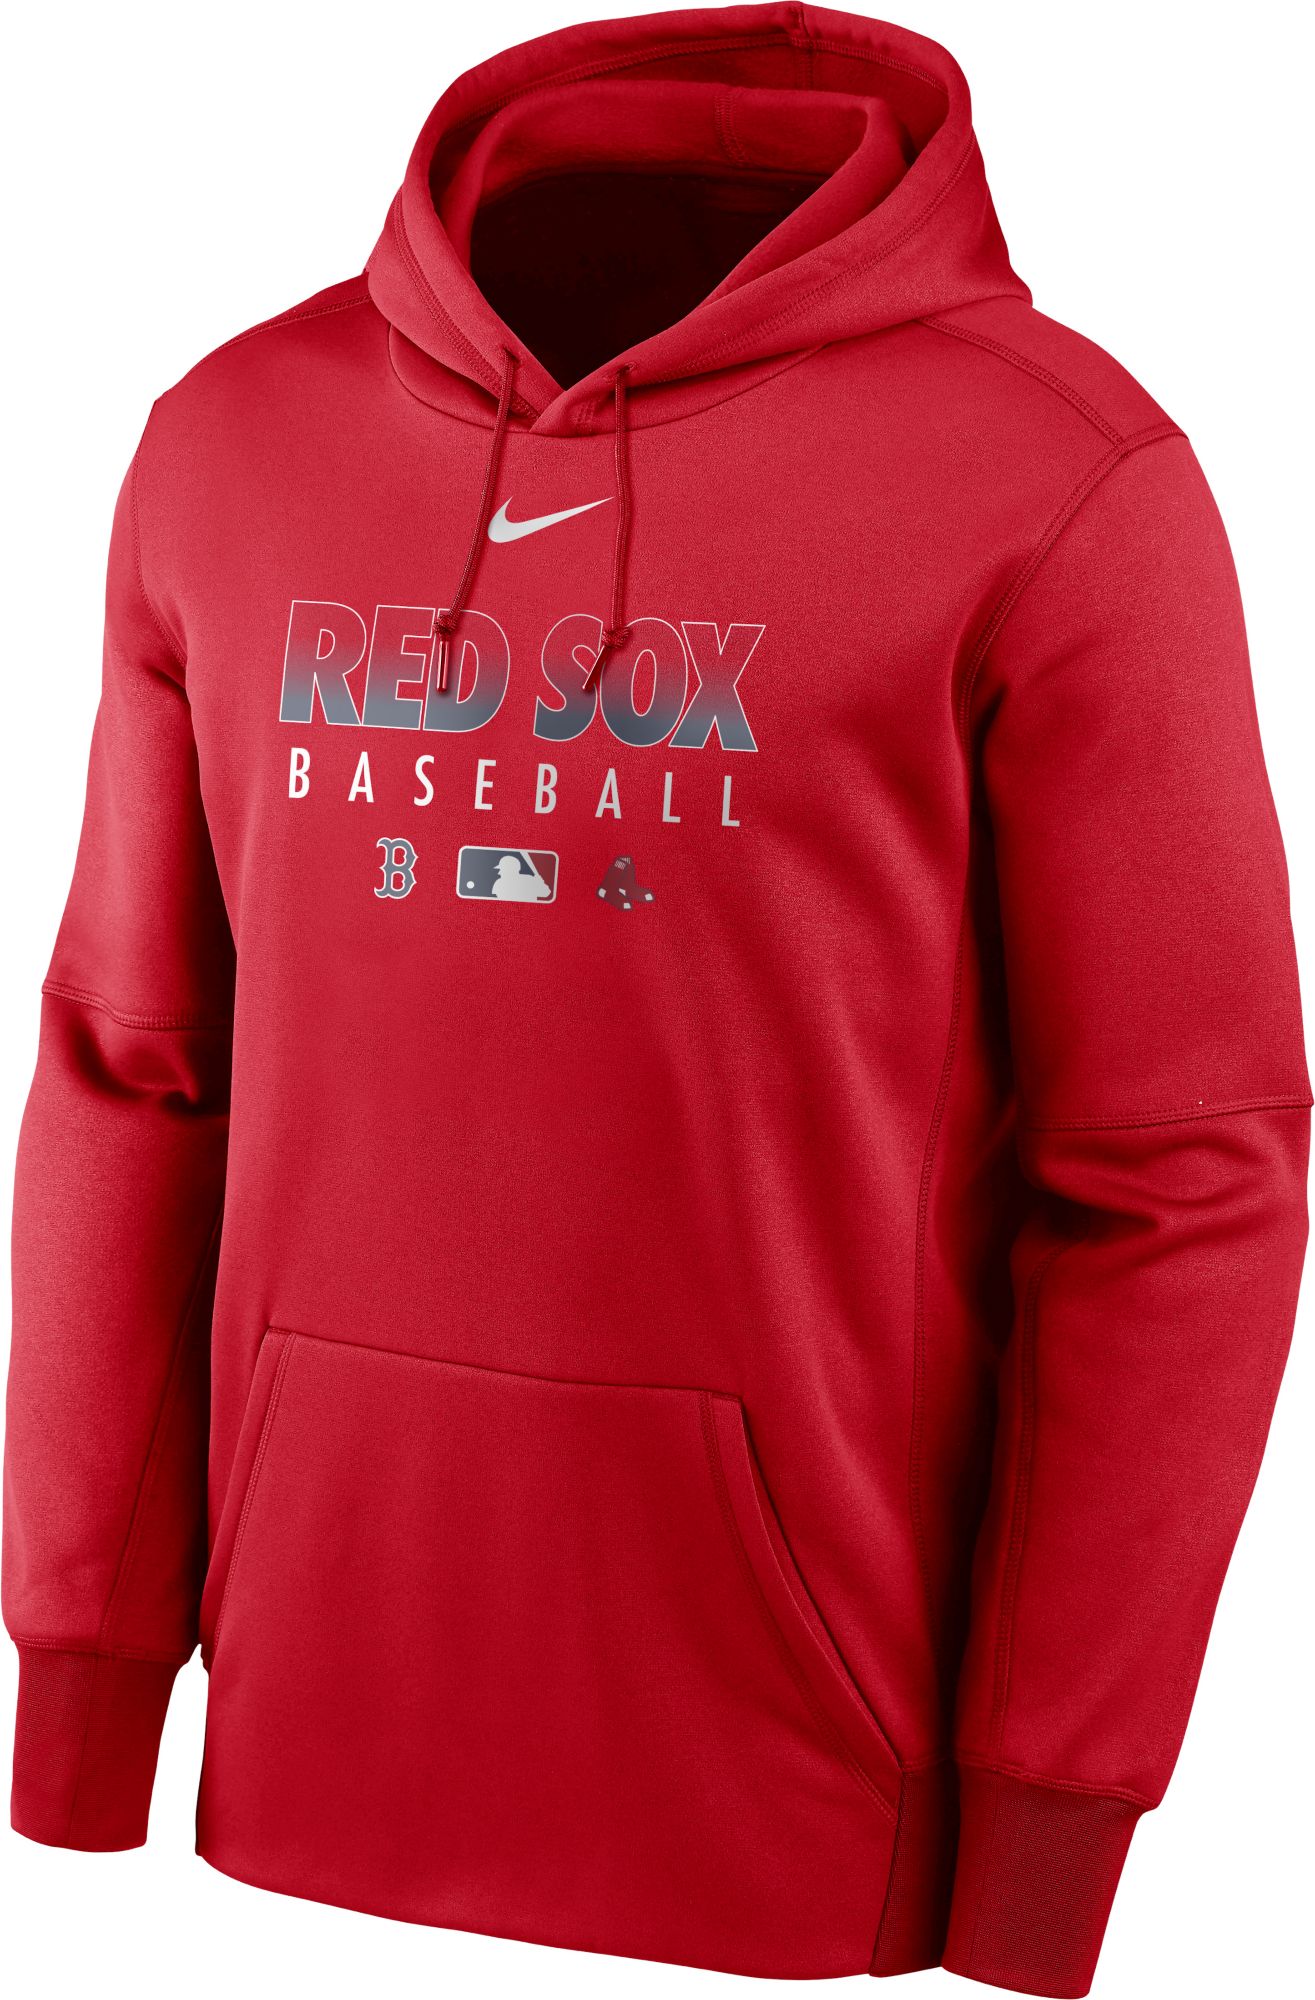 red sox playoff sweatshirt